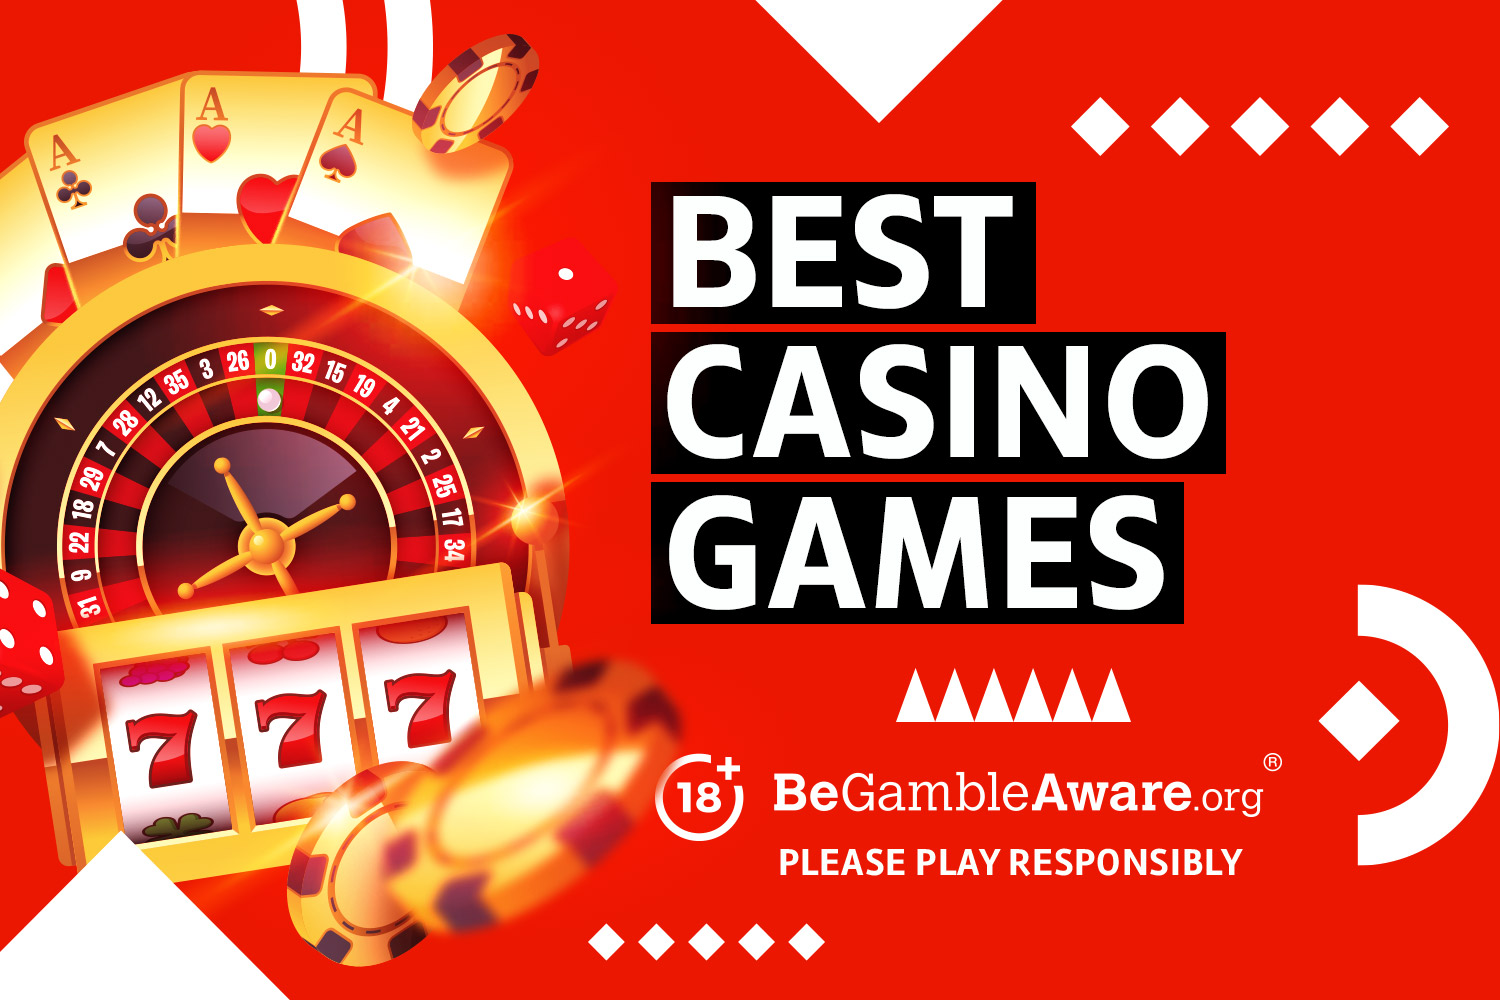 Best casino games. 18+ BeGambleAware.org Please play responsibly.